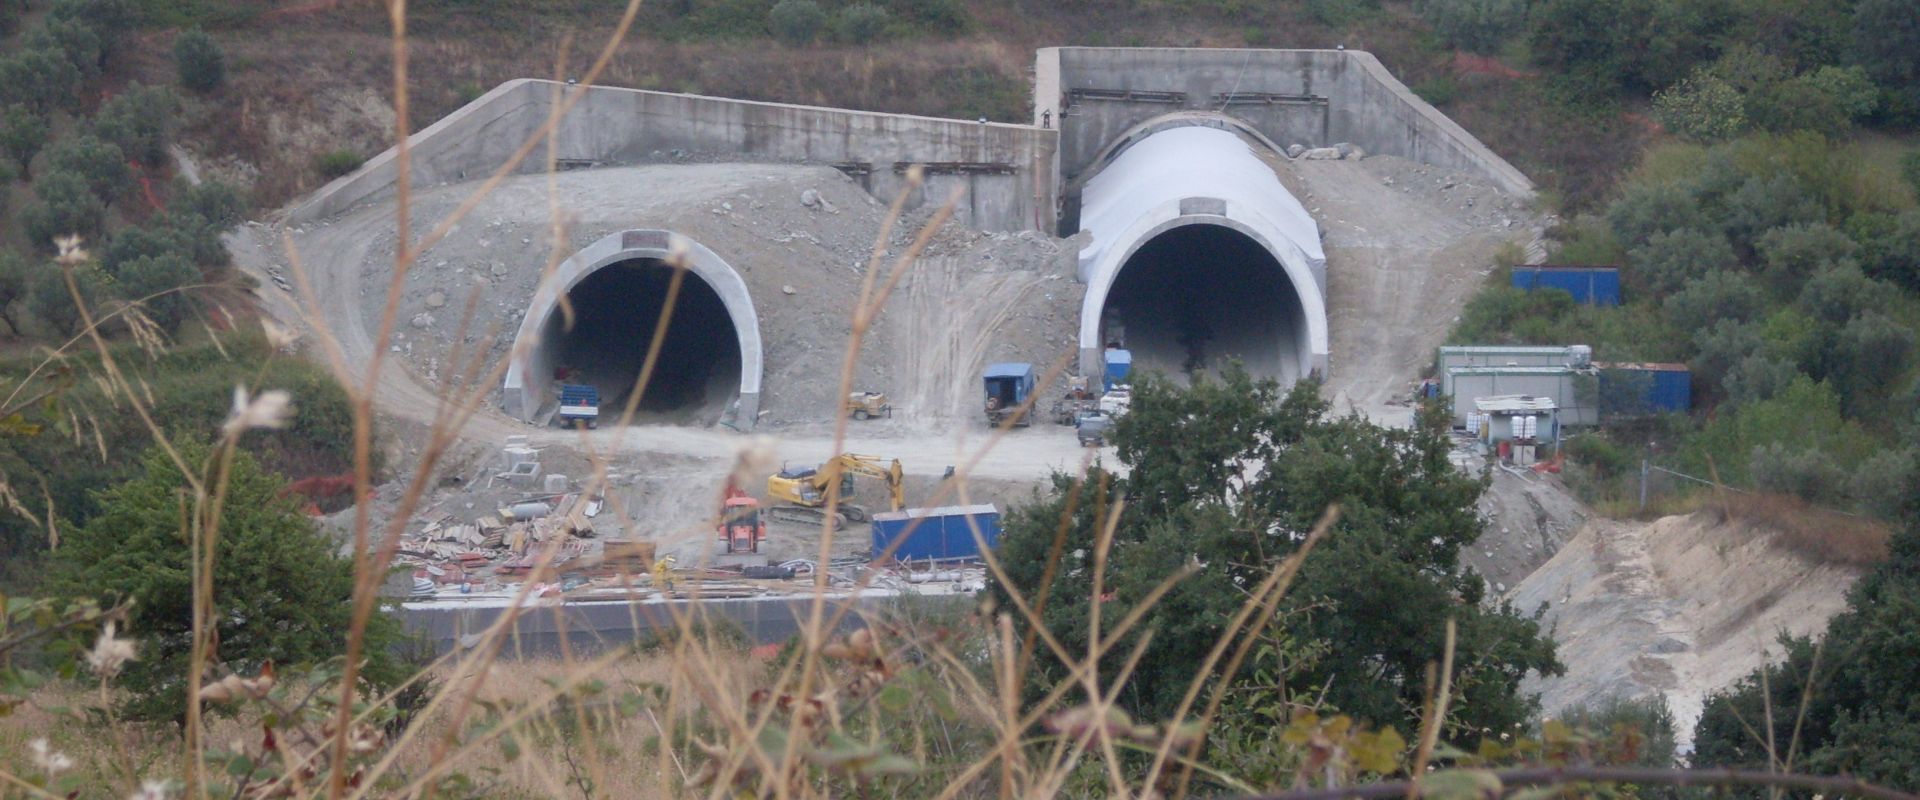 Tronçon SS 106 Jonica, Tunnel Baldaia (Catanzaro).